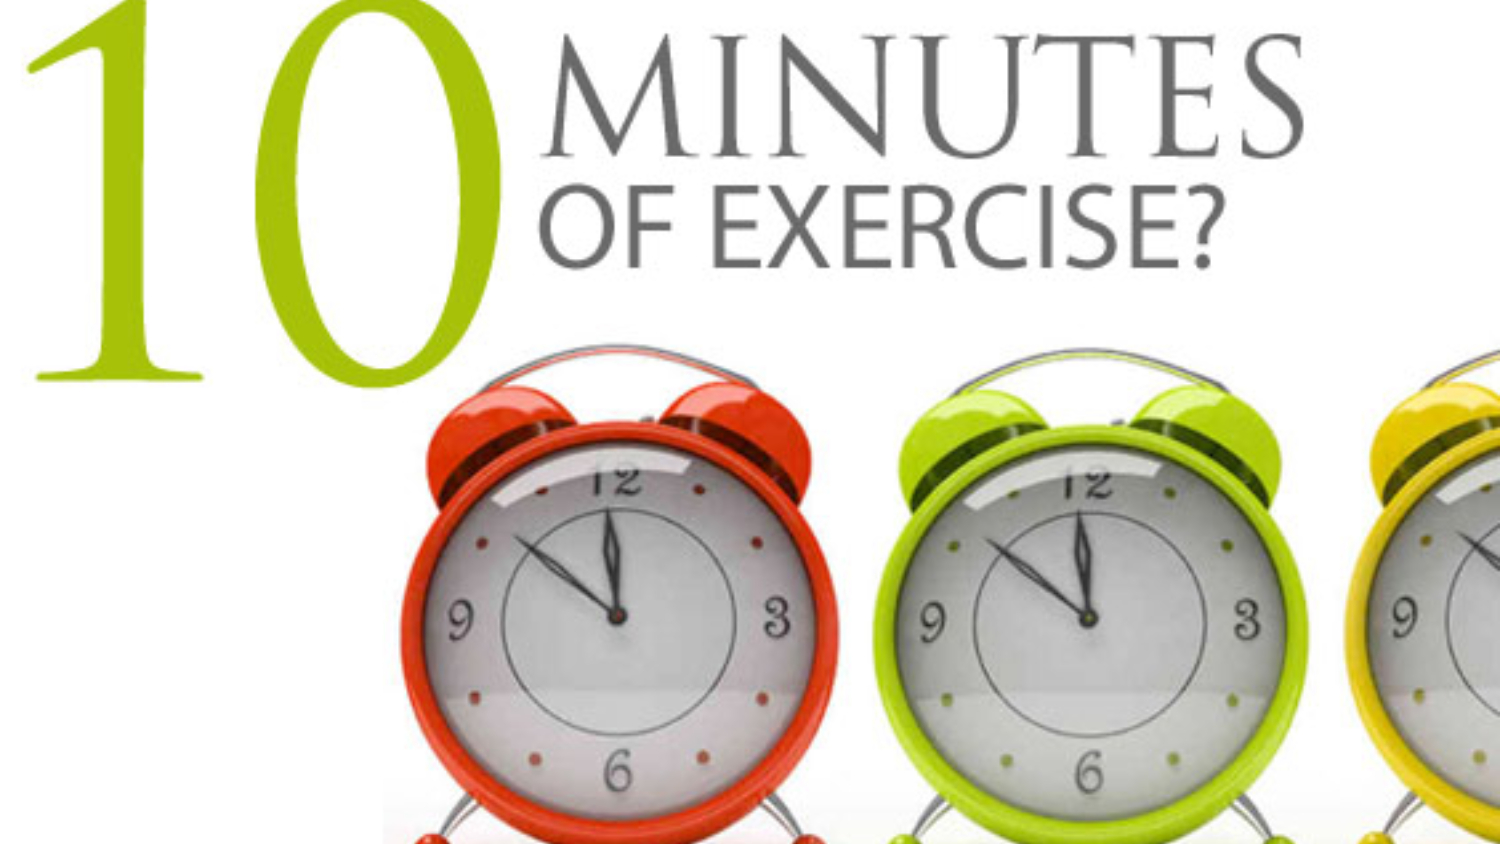 alarm clock - 10 minutes of exercise